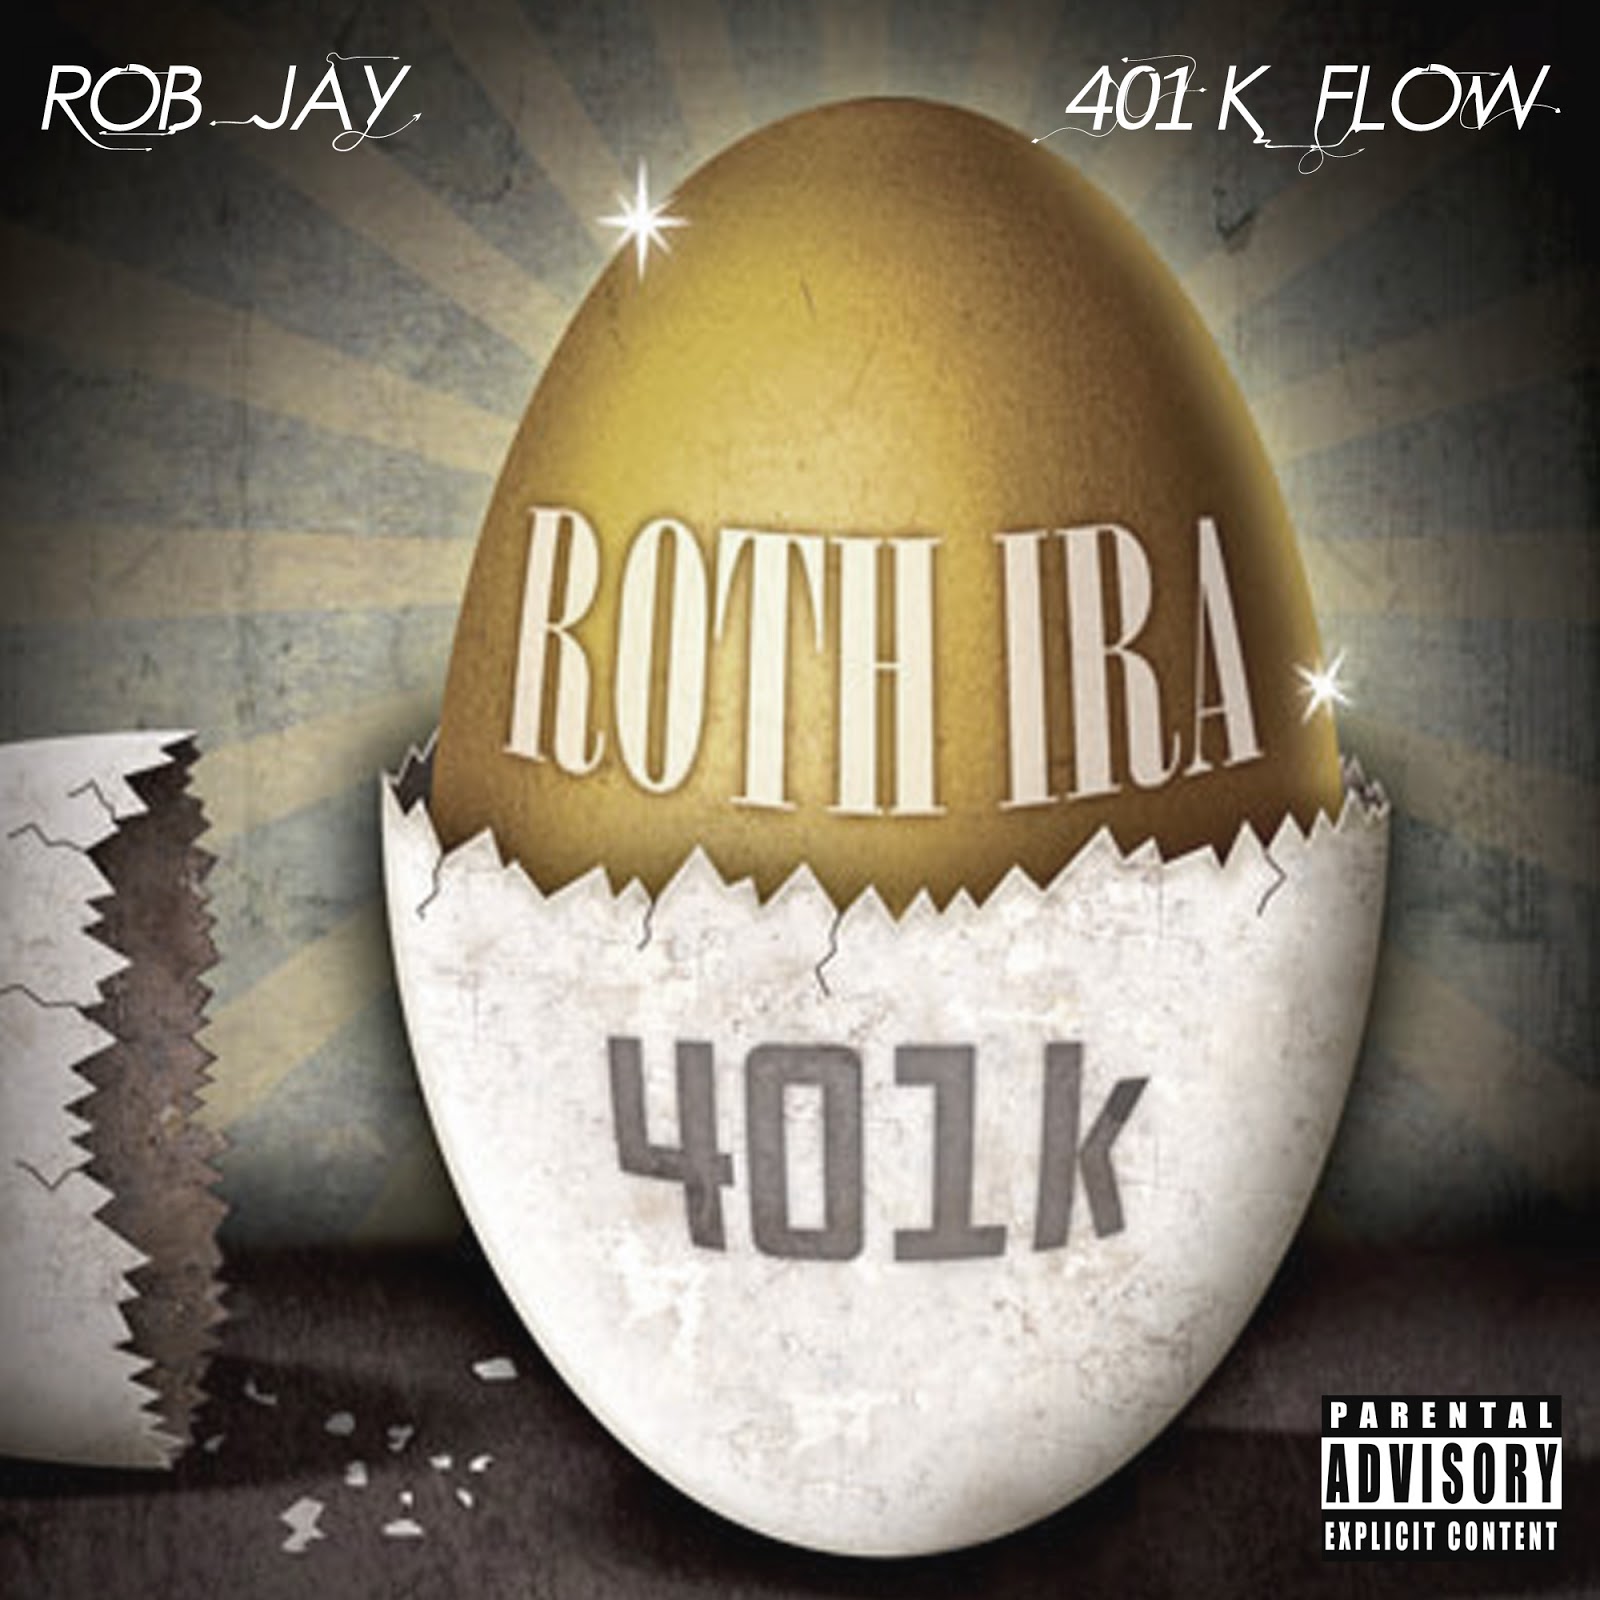 Rob Jay "401K Flow" rockthedub